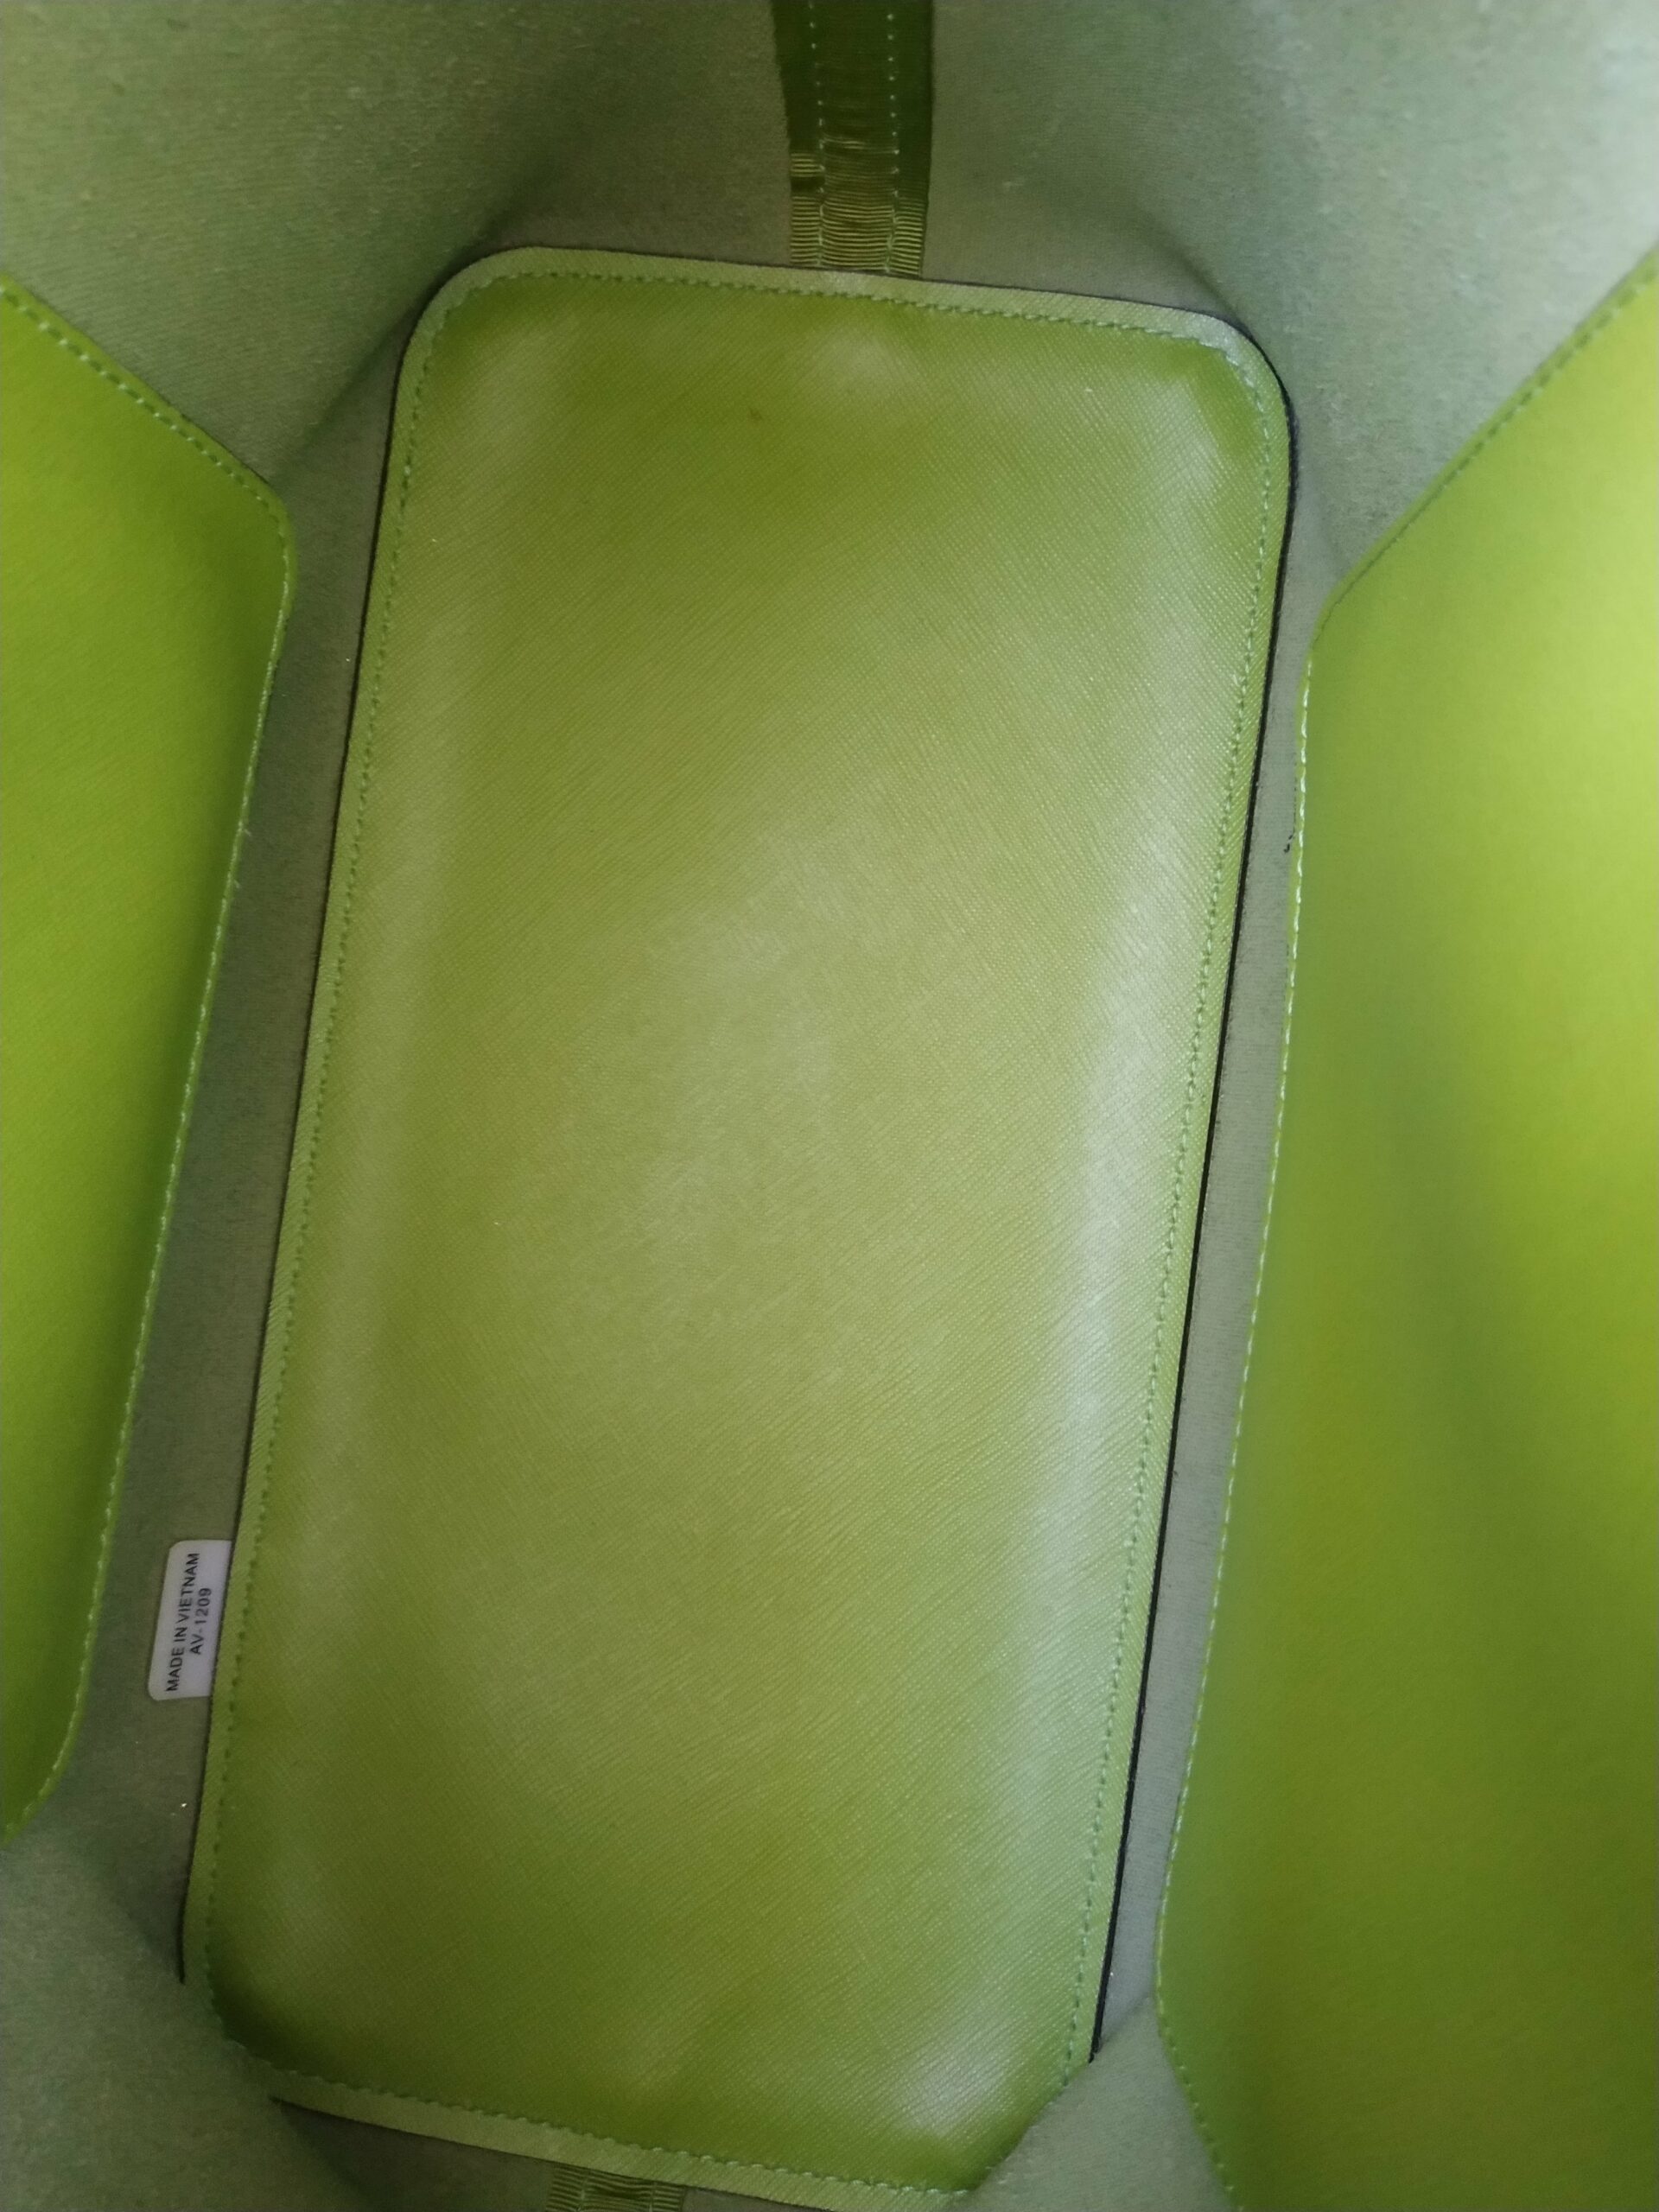 Michael Kors Jet Set Lime Green Saffiano Leather Bag - Earth Luxury